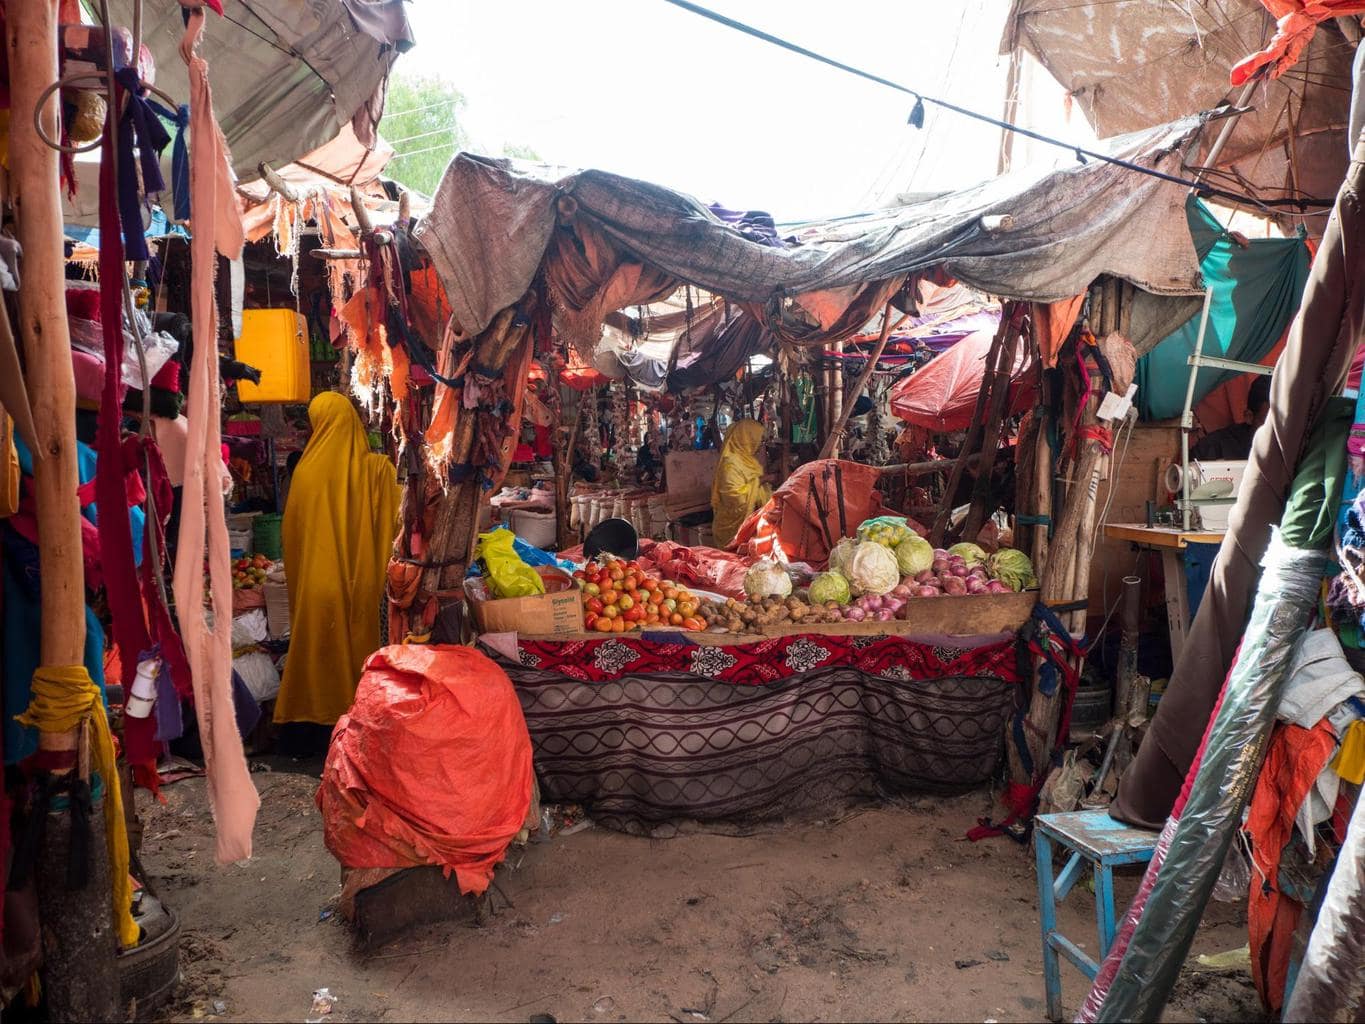 Hargeisa Central Market vendor